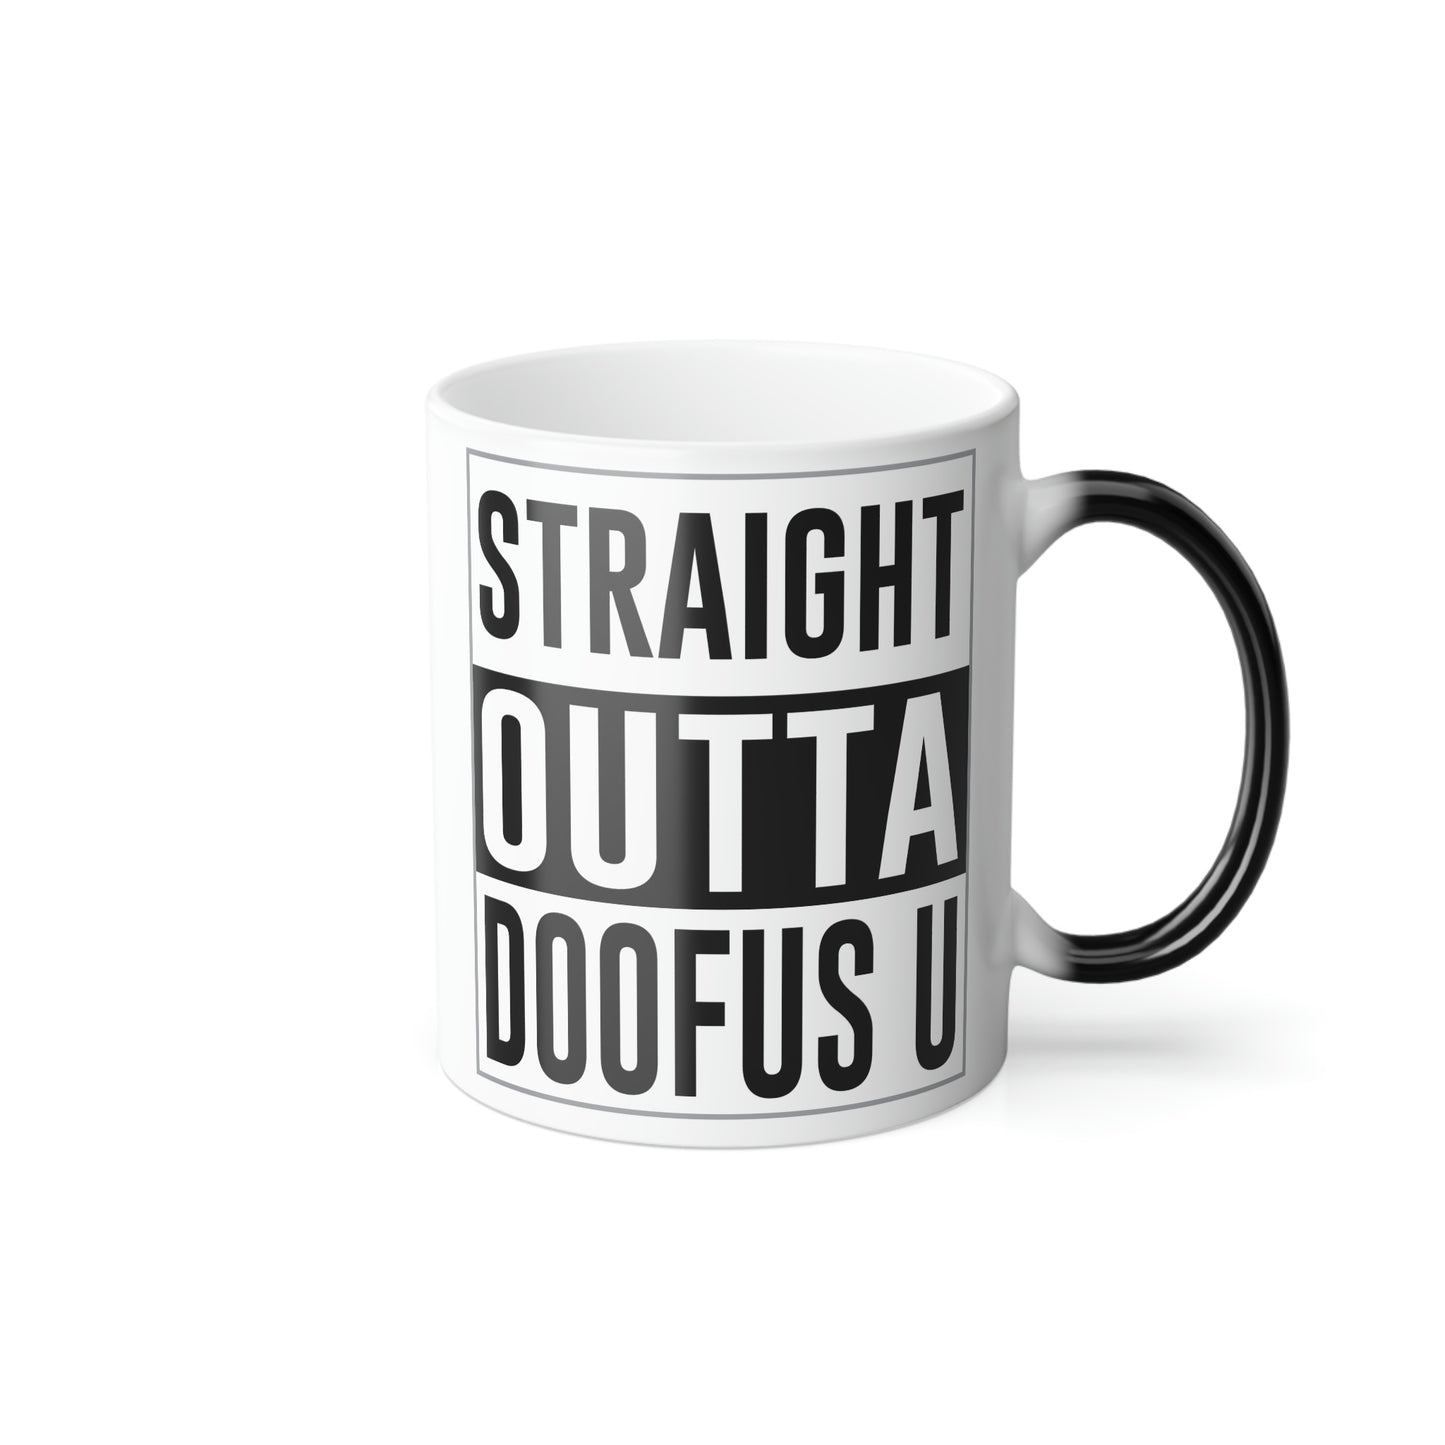 Straight Outta Doofus U (tm) Color Morphing Mug, 11oz Funny Gag Gift